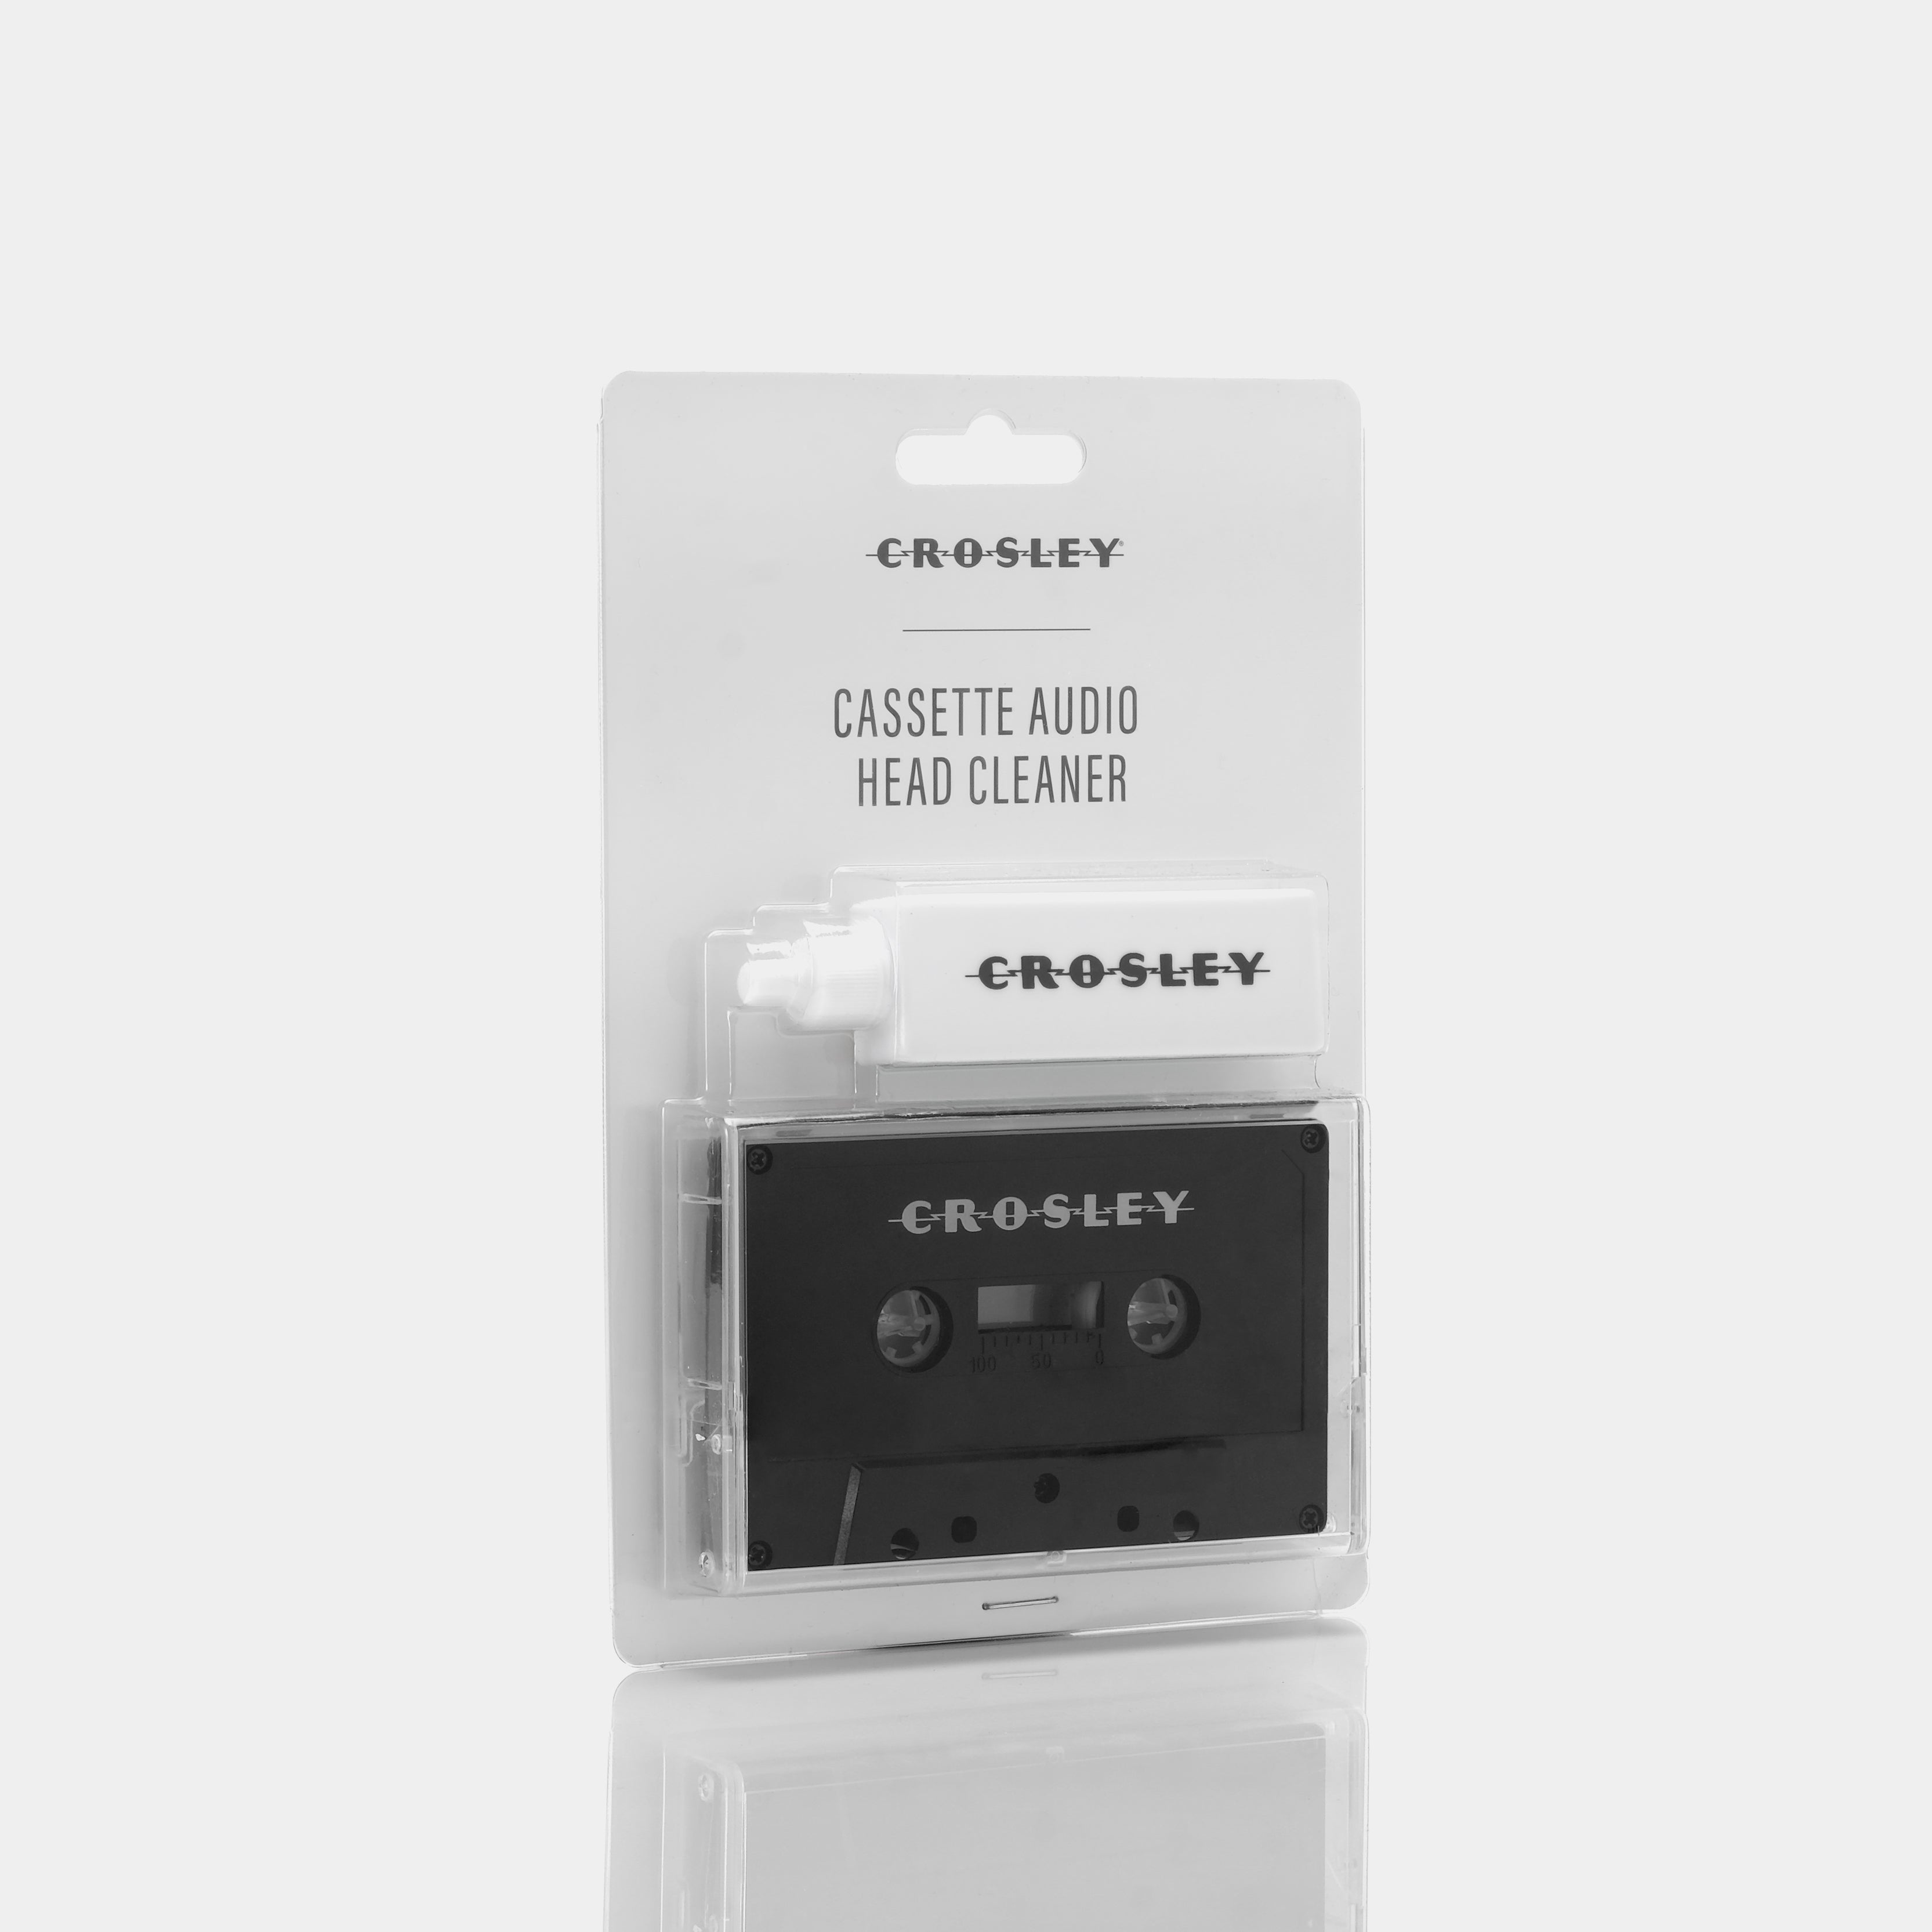 Crosley Cassette Audio Head Cleaner